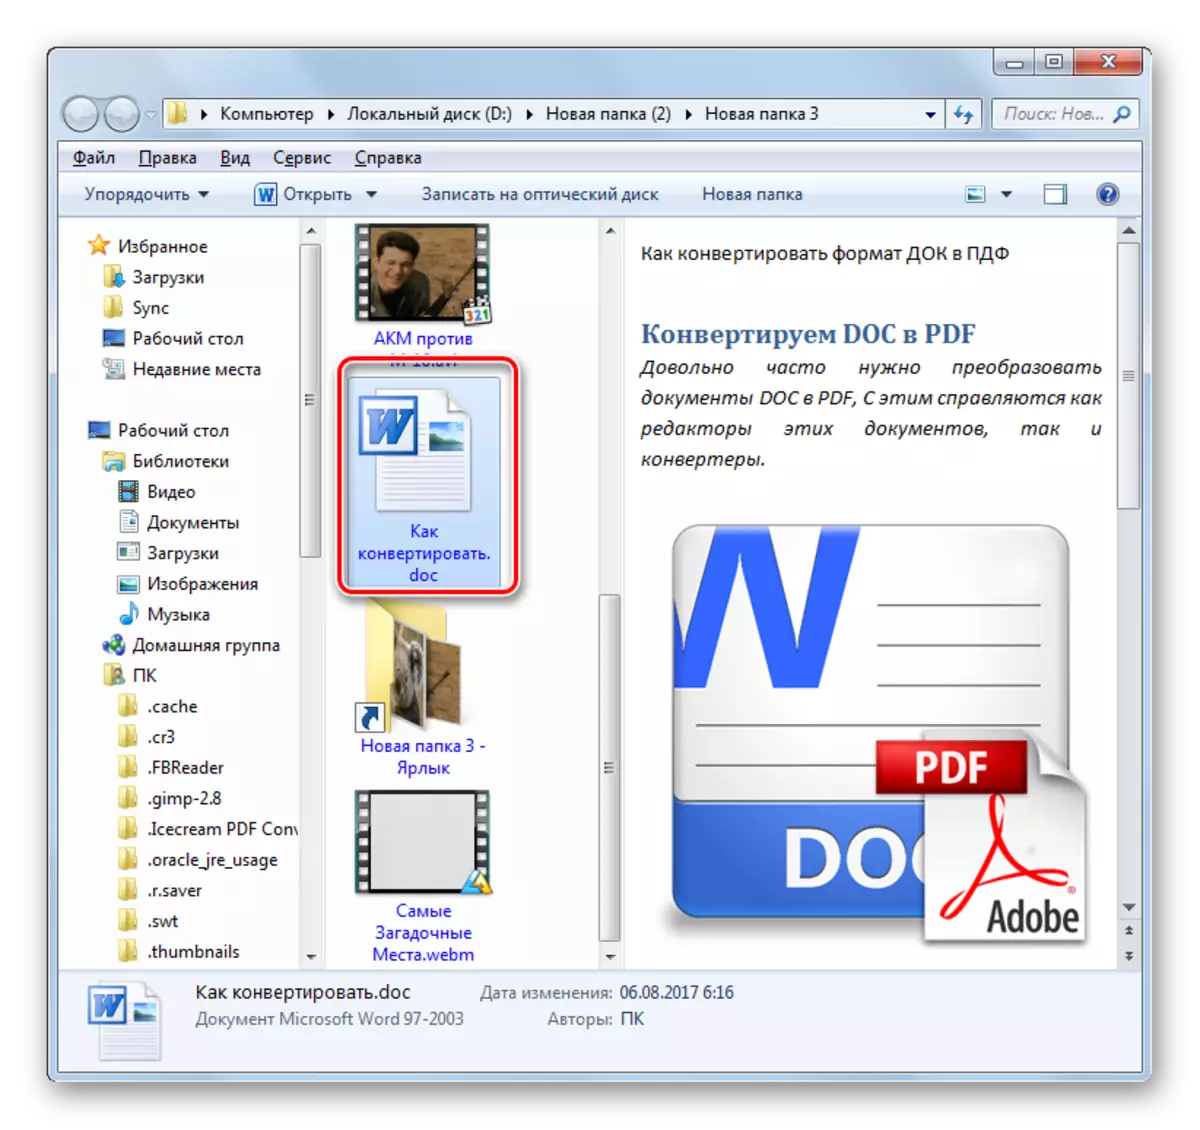 INMINEN Resminamany Windows Explorer-de doc formatda tapmagyny tapýar